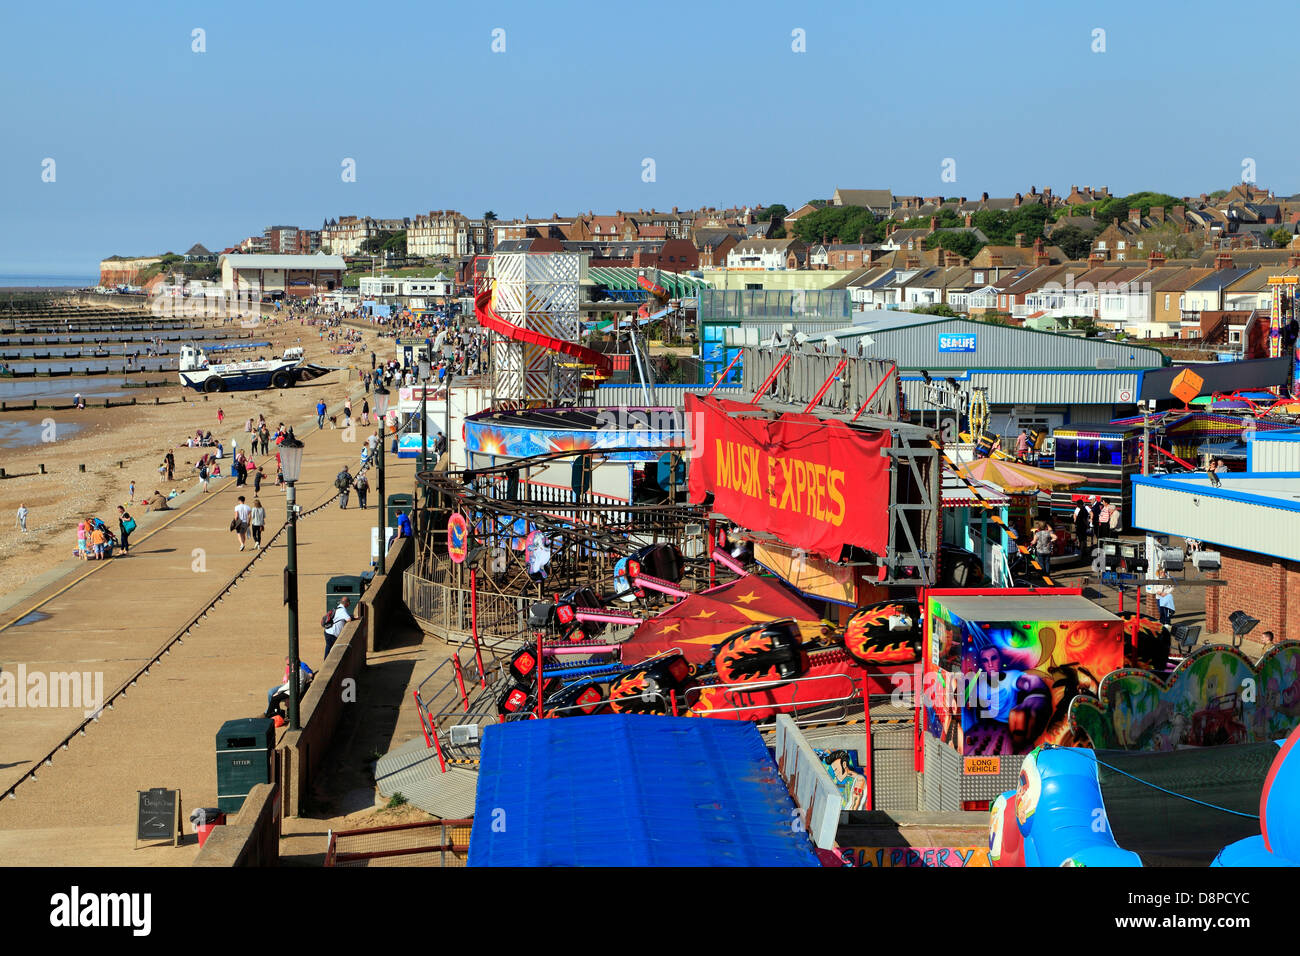 Hunstanton, Norfolk, Luna Park, Spiaggia, la città della fiera, Inghilterra UK seaside resort resorts inglese Foto Stock